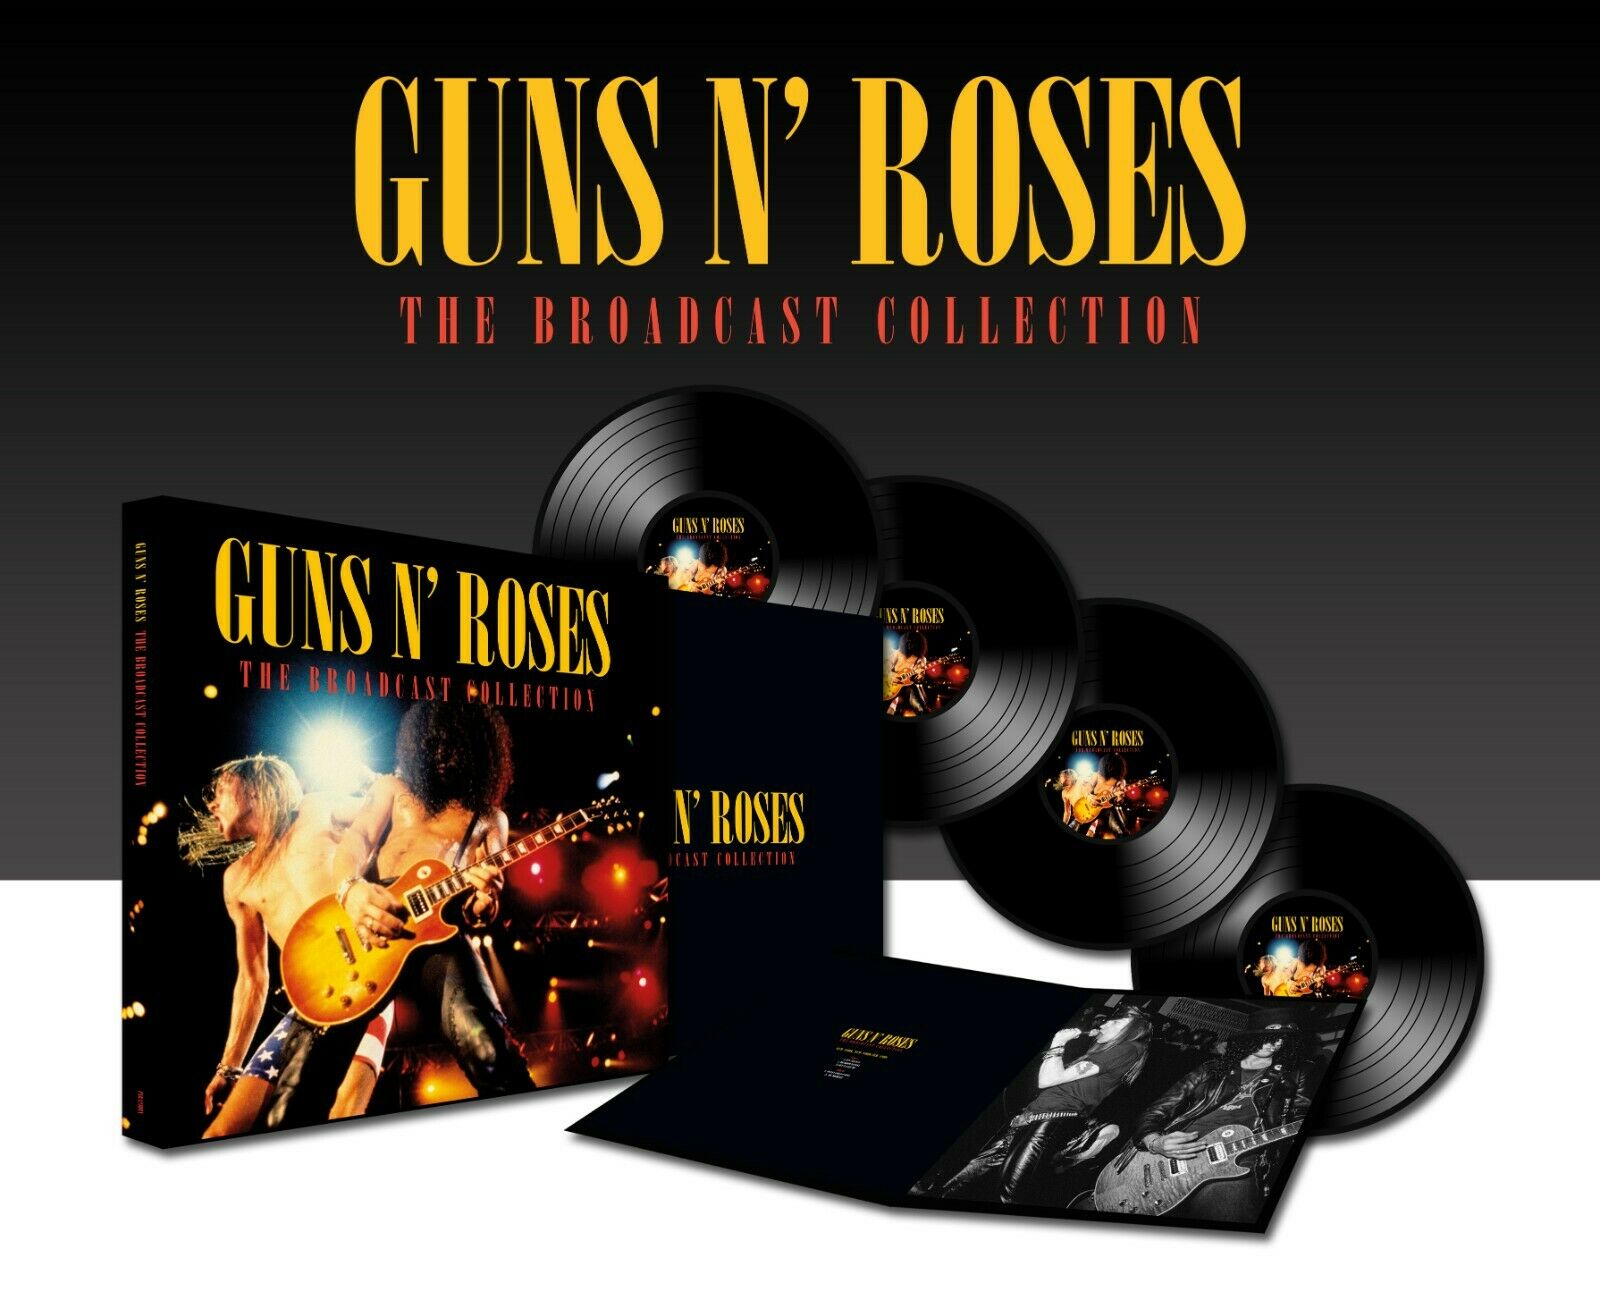 GUNS N' ROSES – LIVE AT THE RITZ NEW YORK 2 FEBRUARY 1988 CD